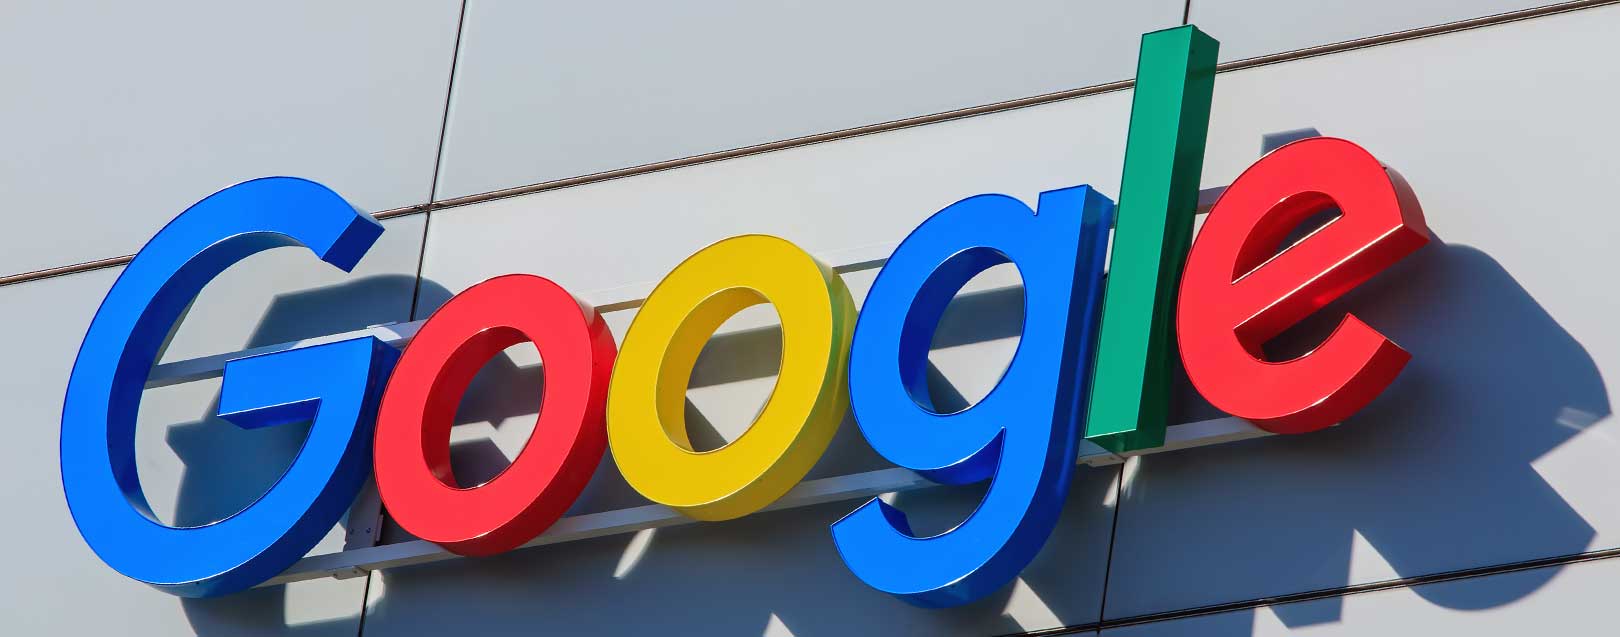 European Union slams Google with a $2.7 bn antitrust fine